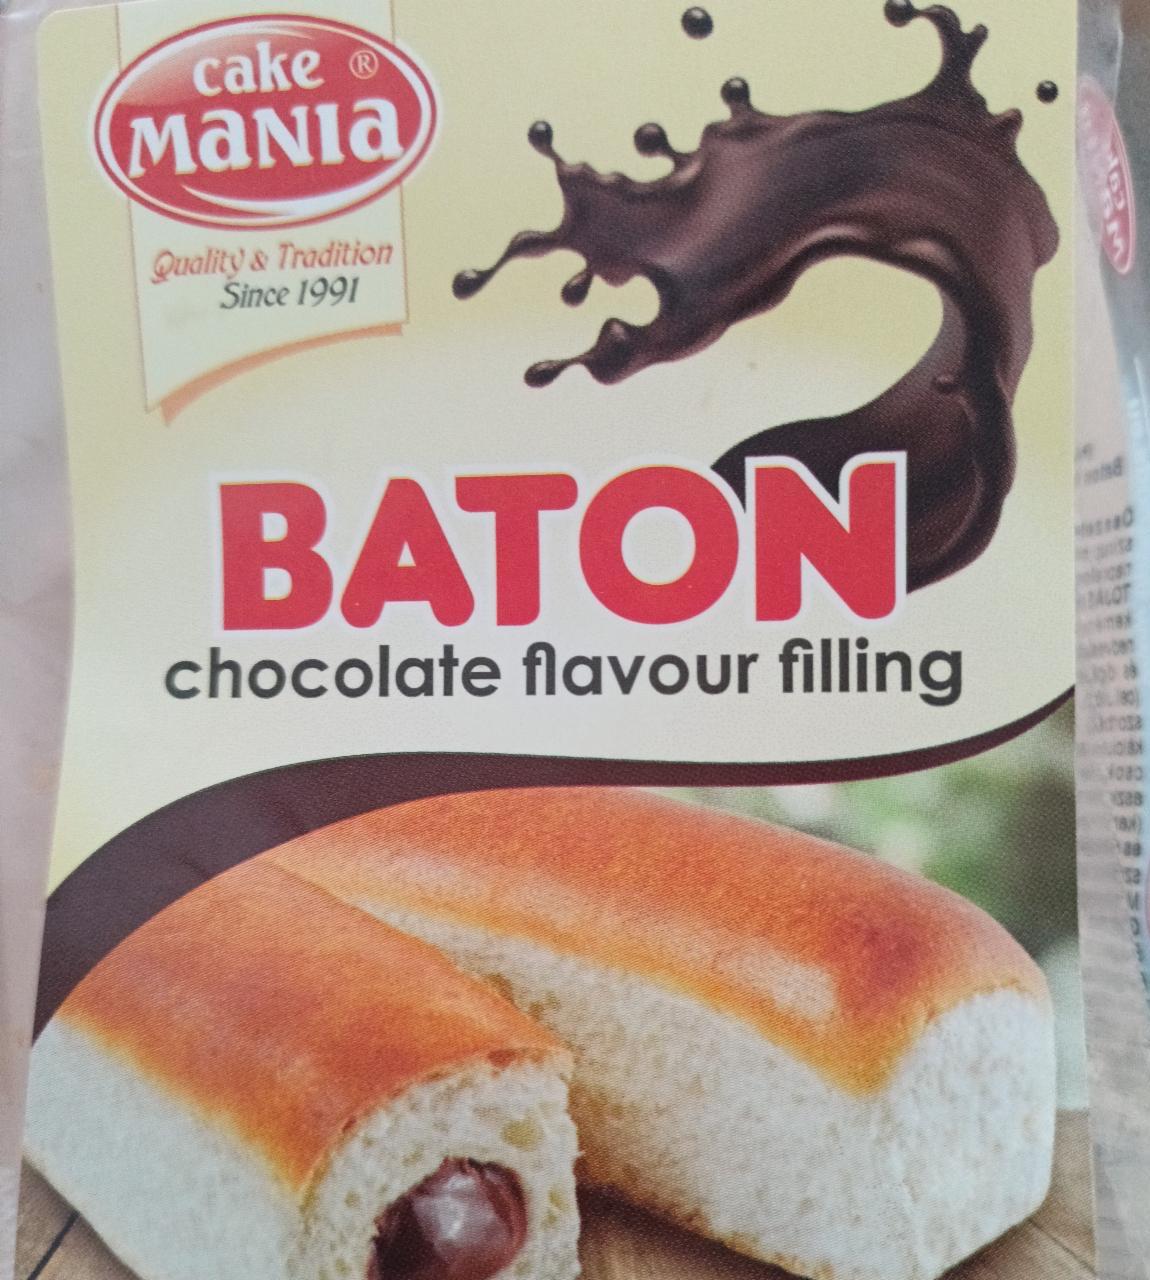 Képek - Baton chocolate flavour filling Cake Mania